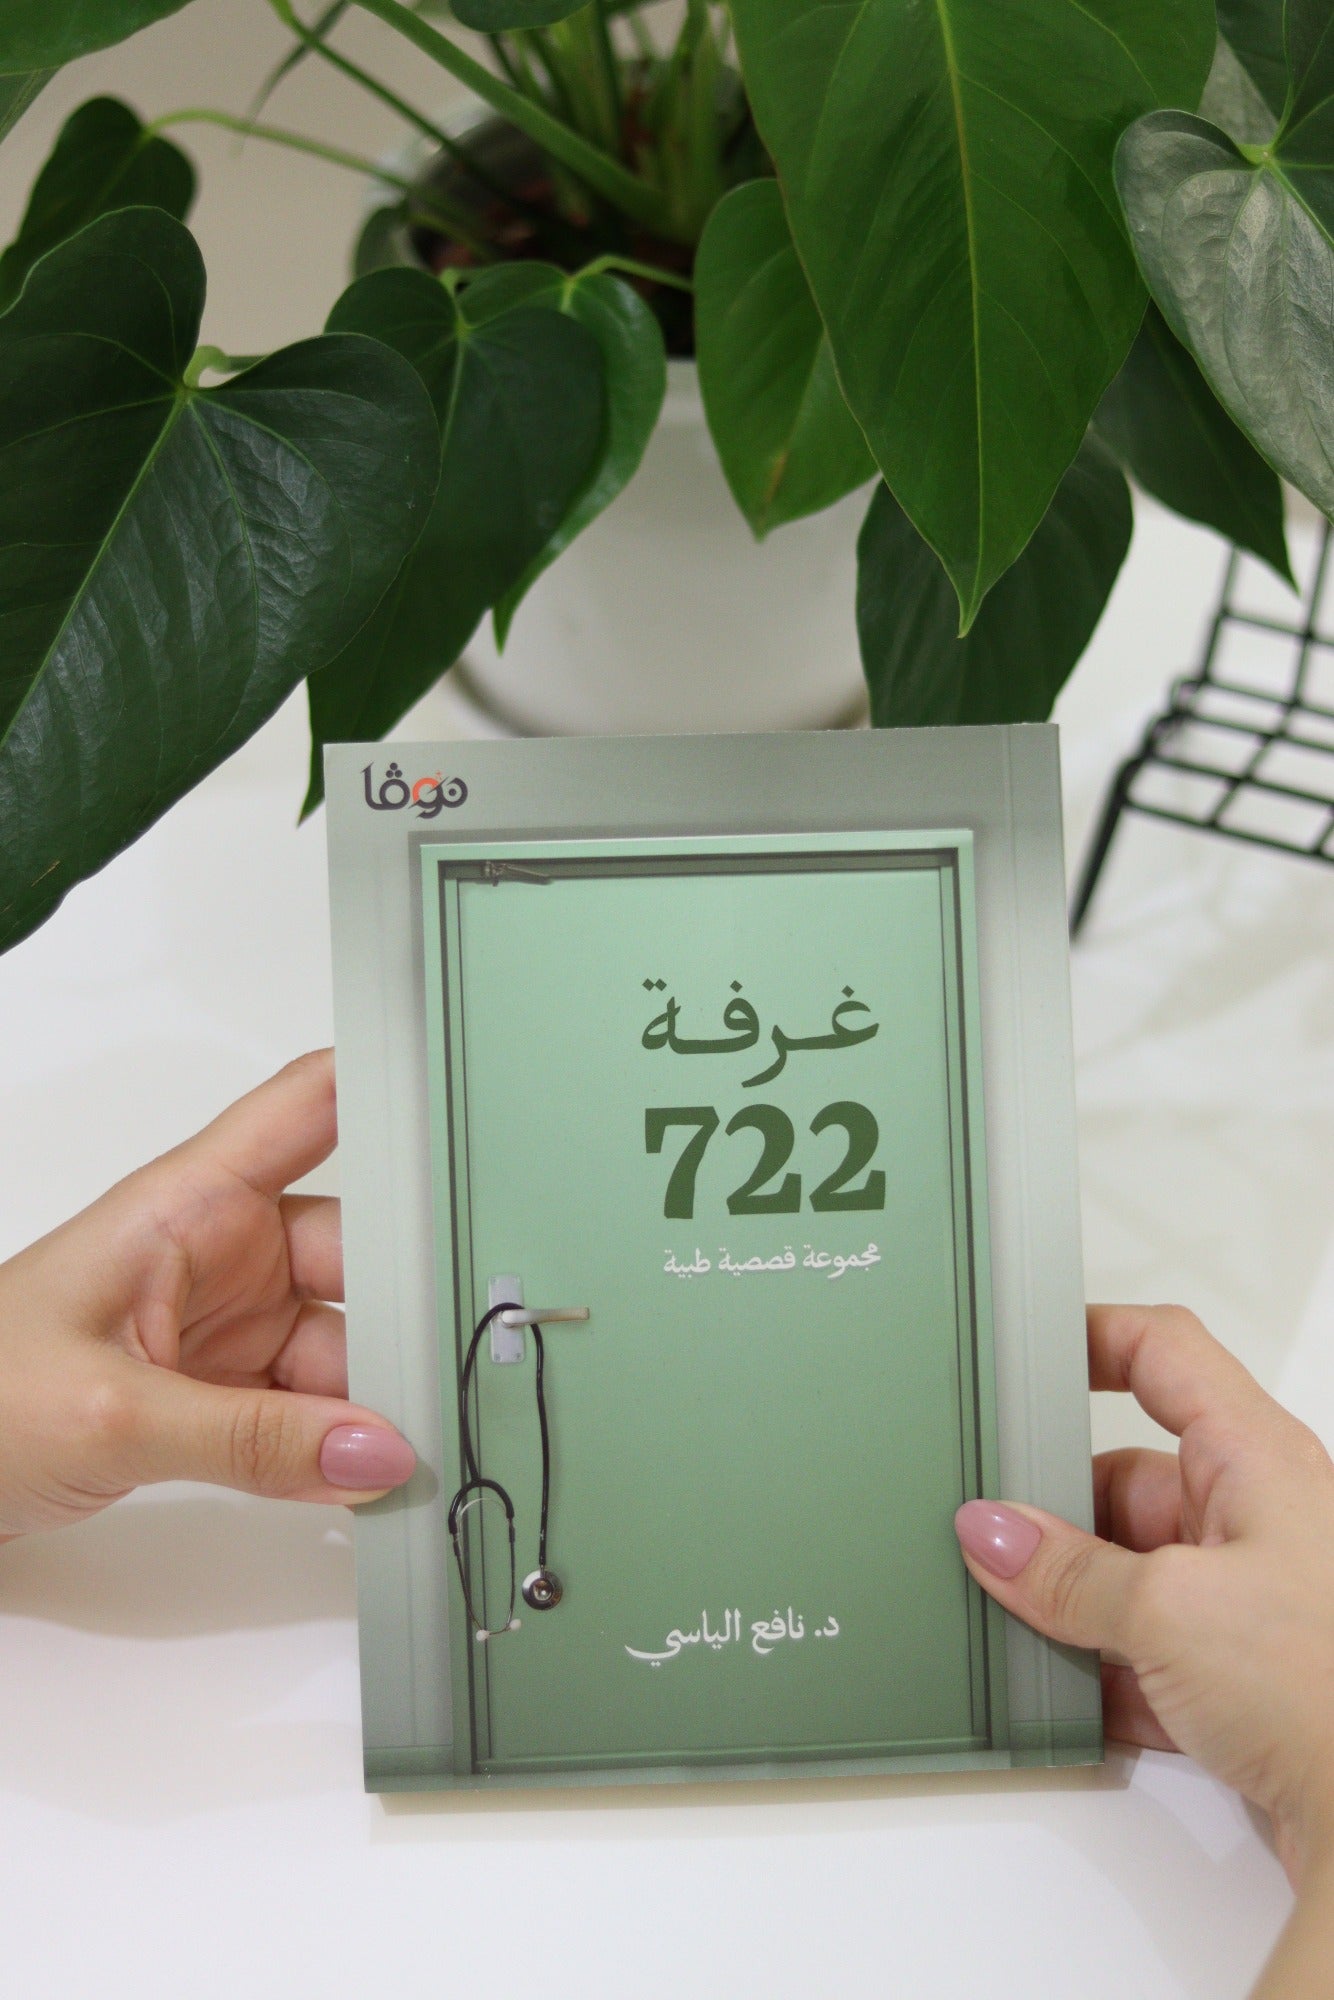 Room 722 ( 722 غرفة ) by Dr. Nafie Ilyasi